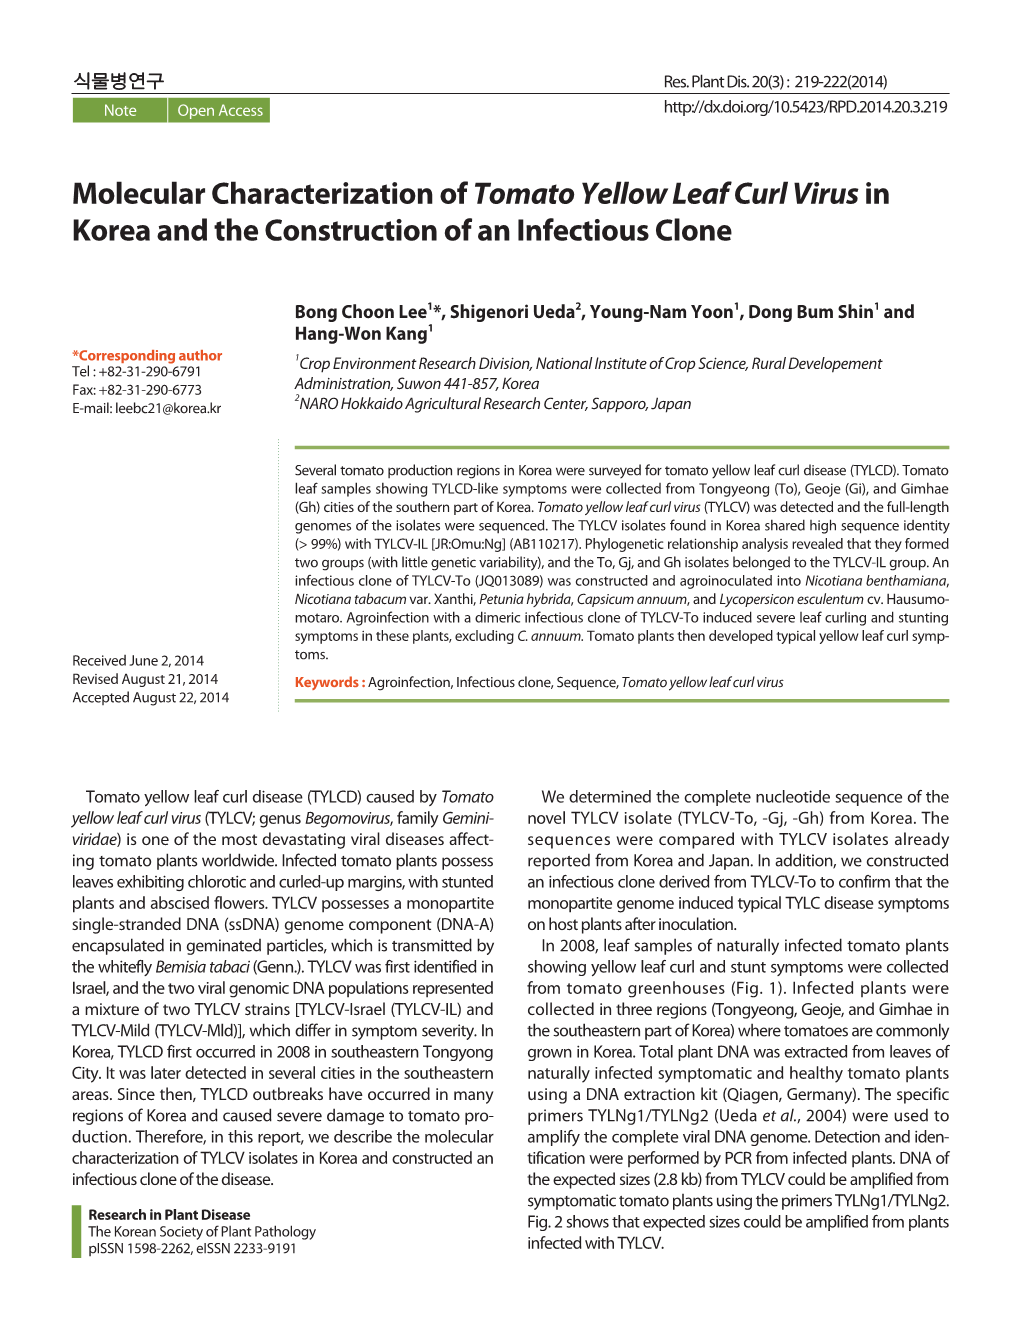 Molecular Characterization of Tomato Yellow Leaf Curl Virusin Korea And